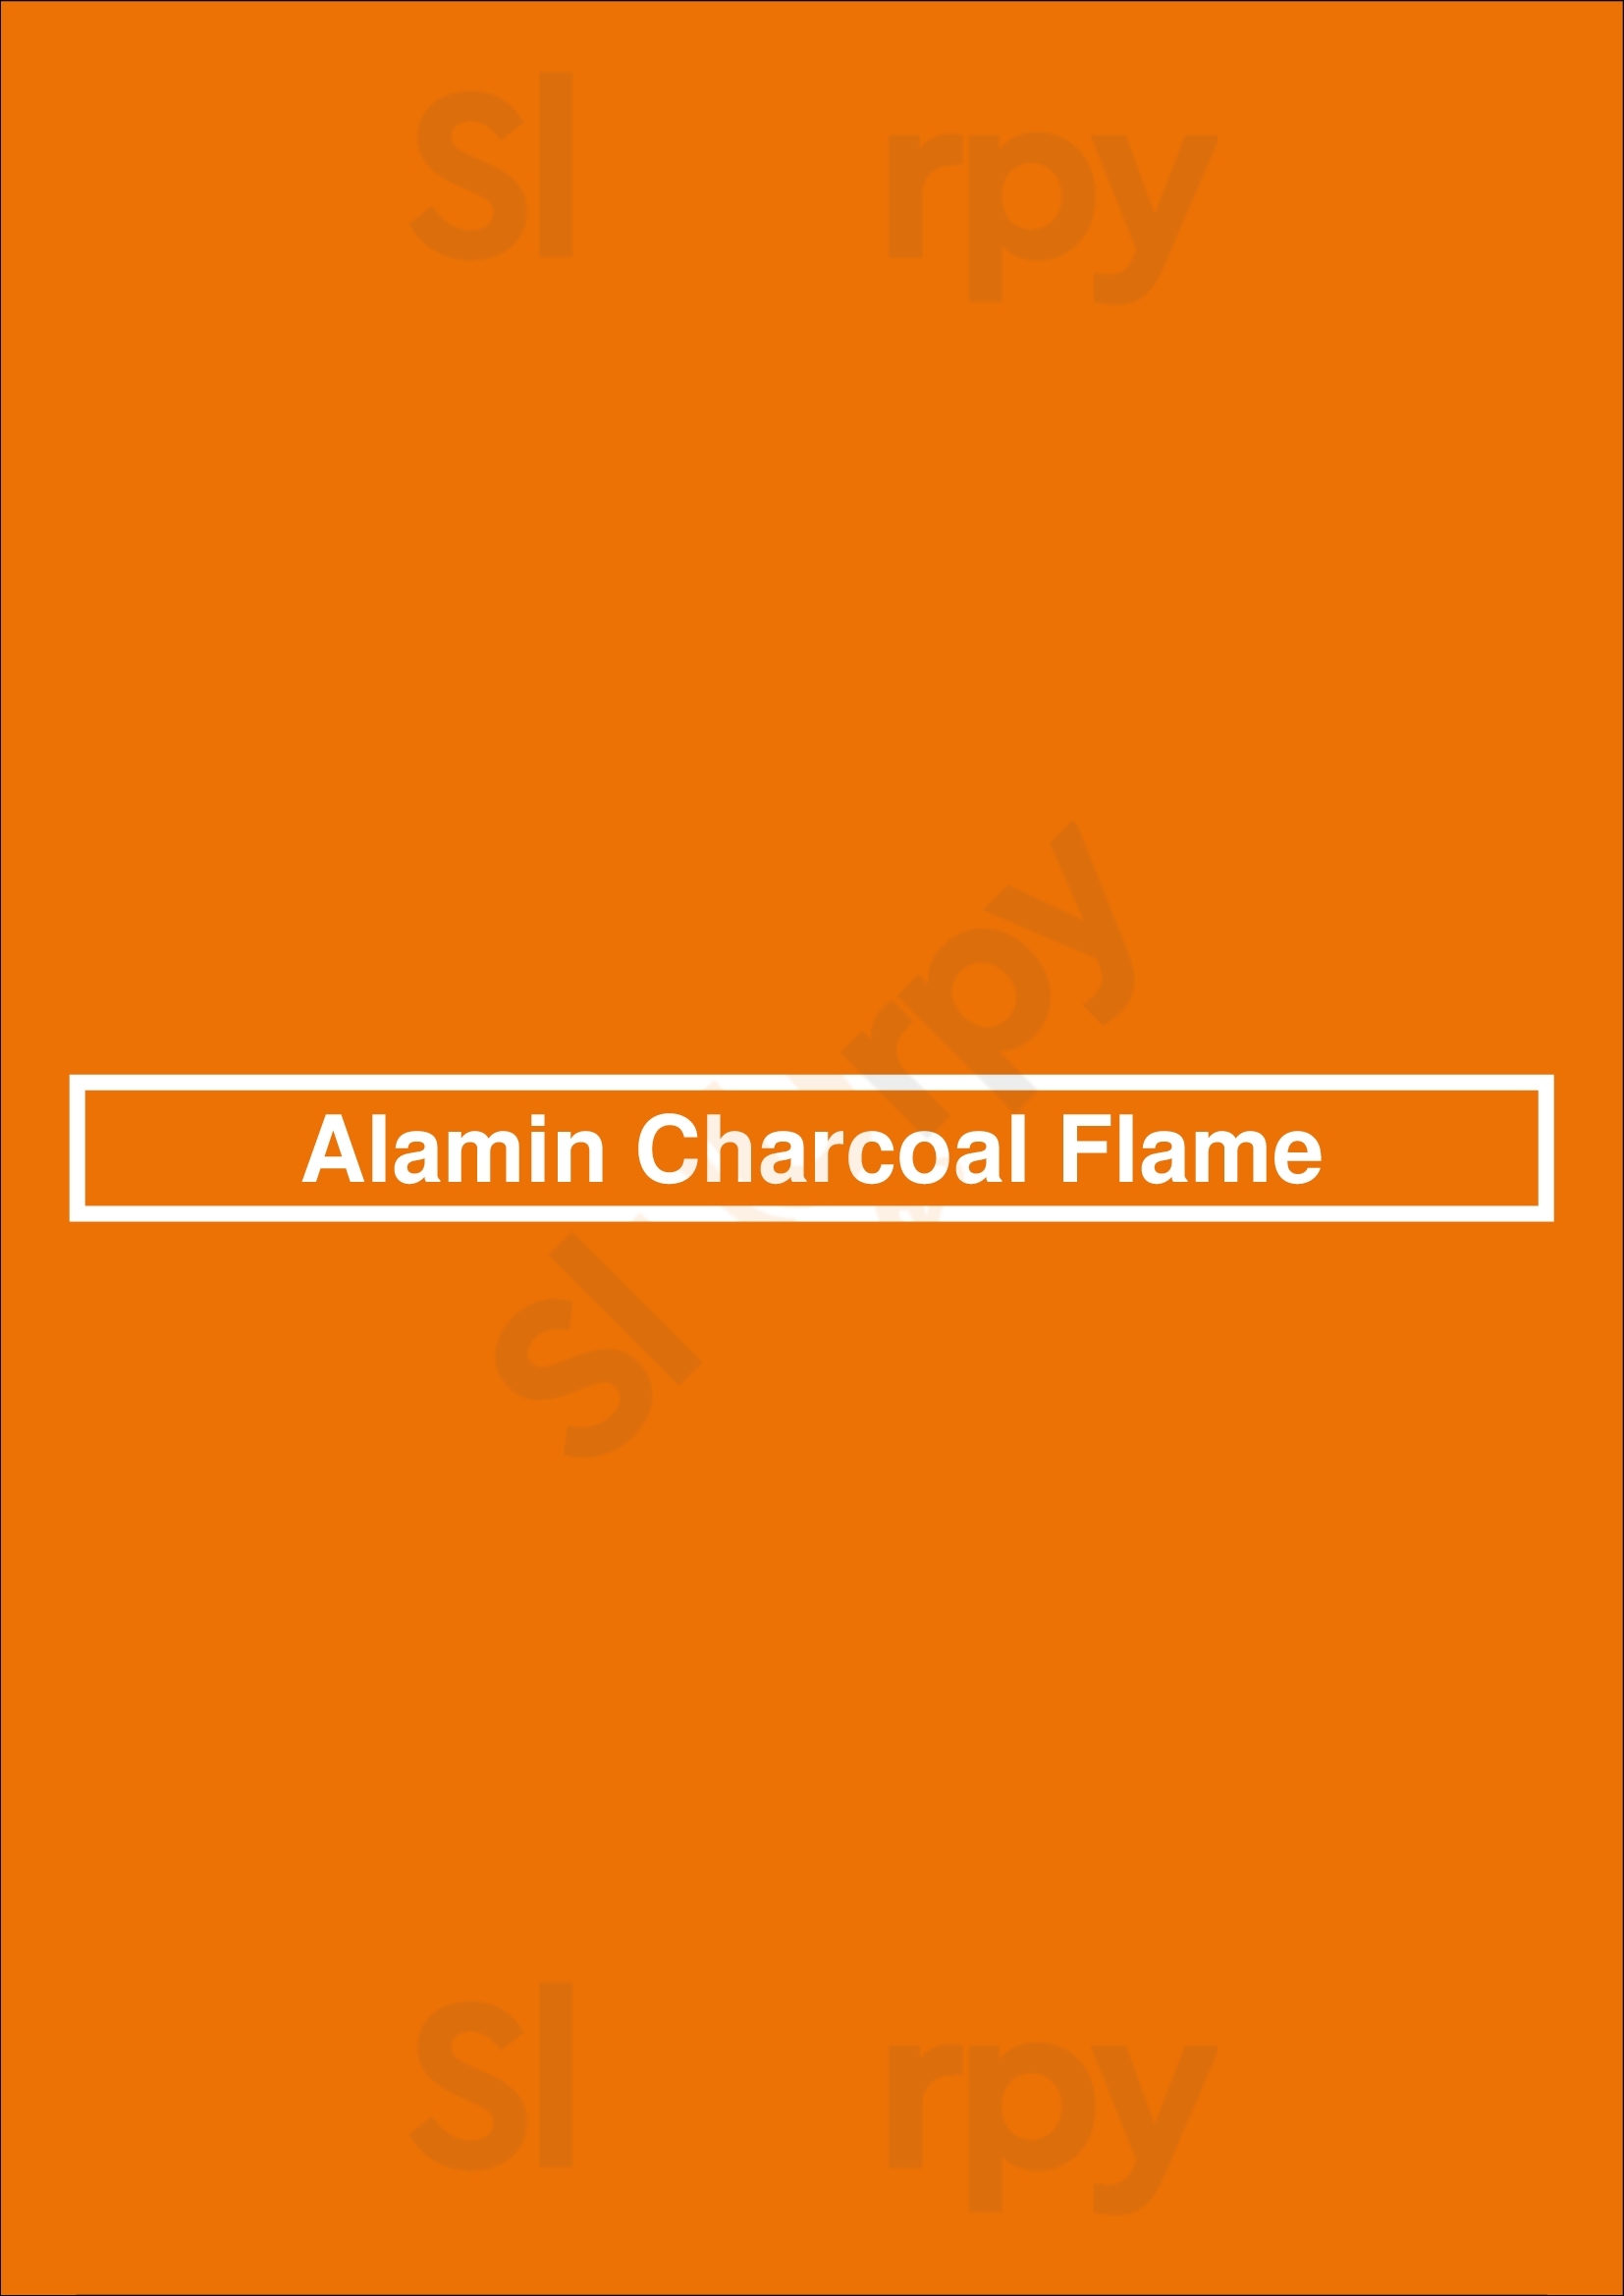 Alamin Charcoal Flame Hamilton Menu - 1